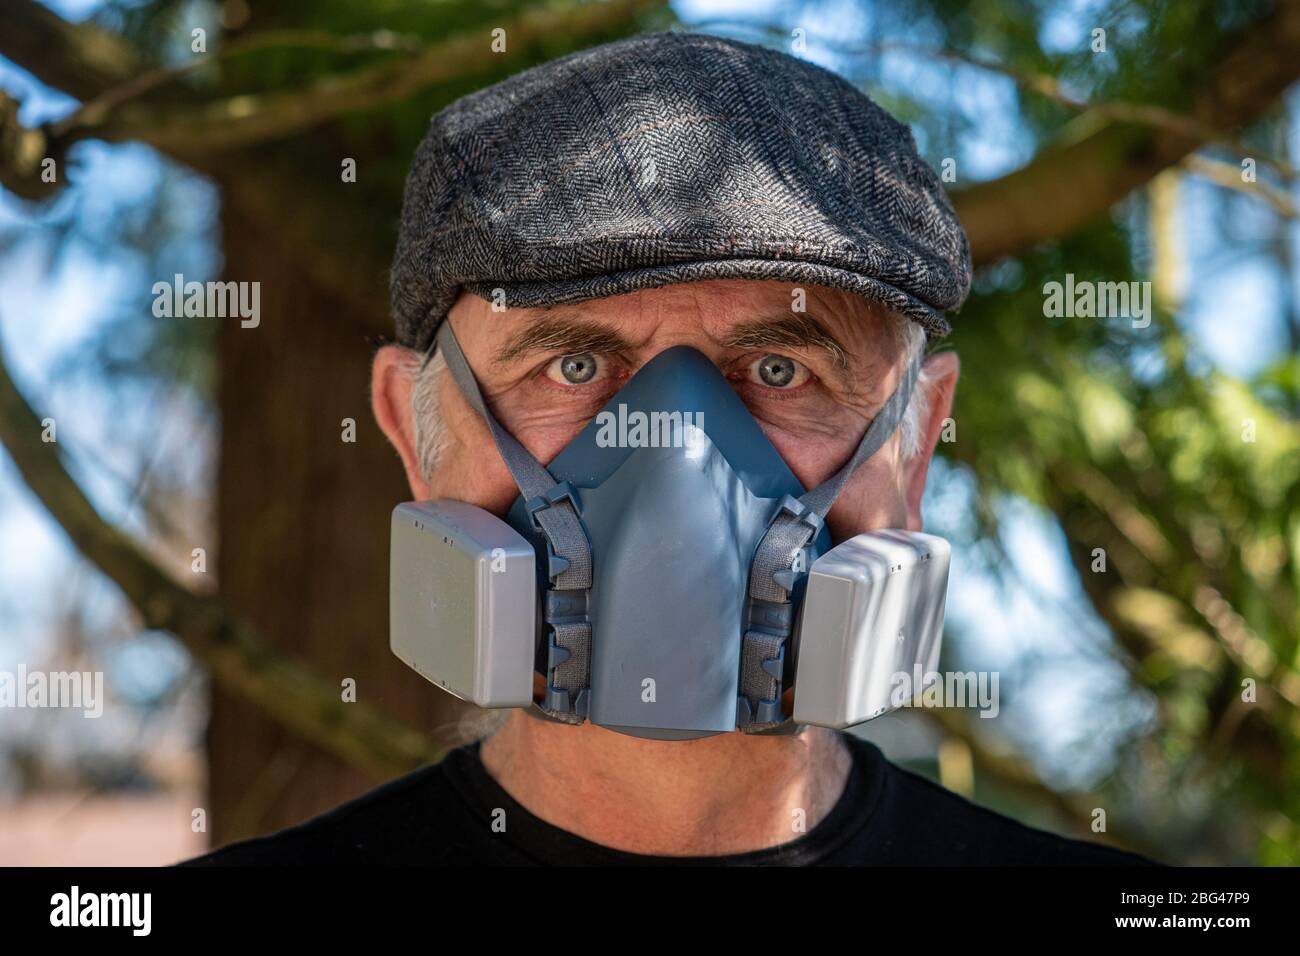 Portrait of a man wearing a HEPA filter mask Stock Photo - Alamy